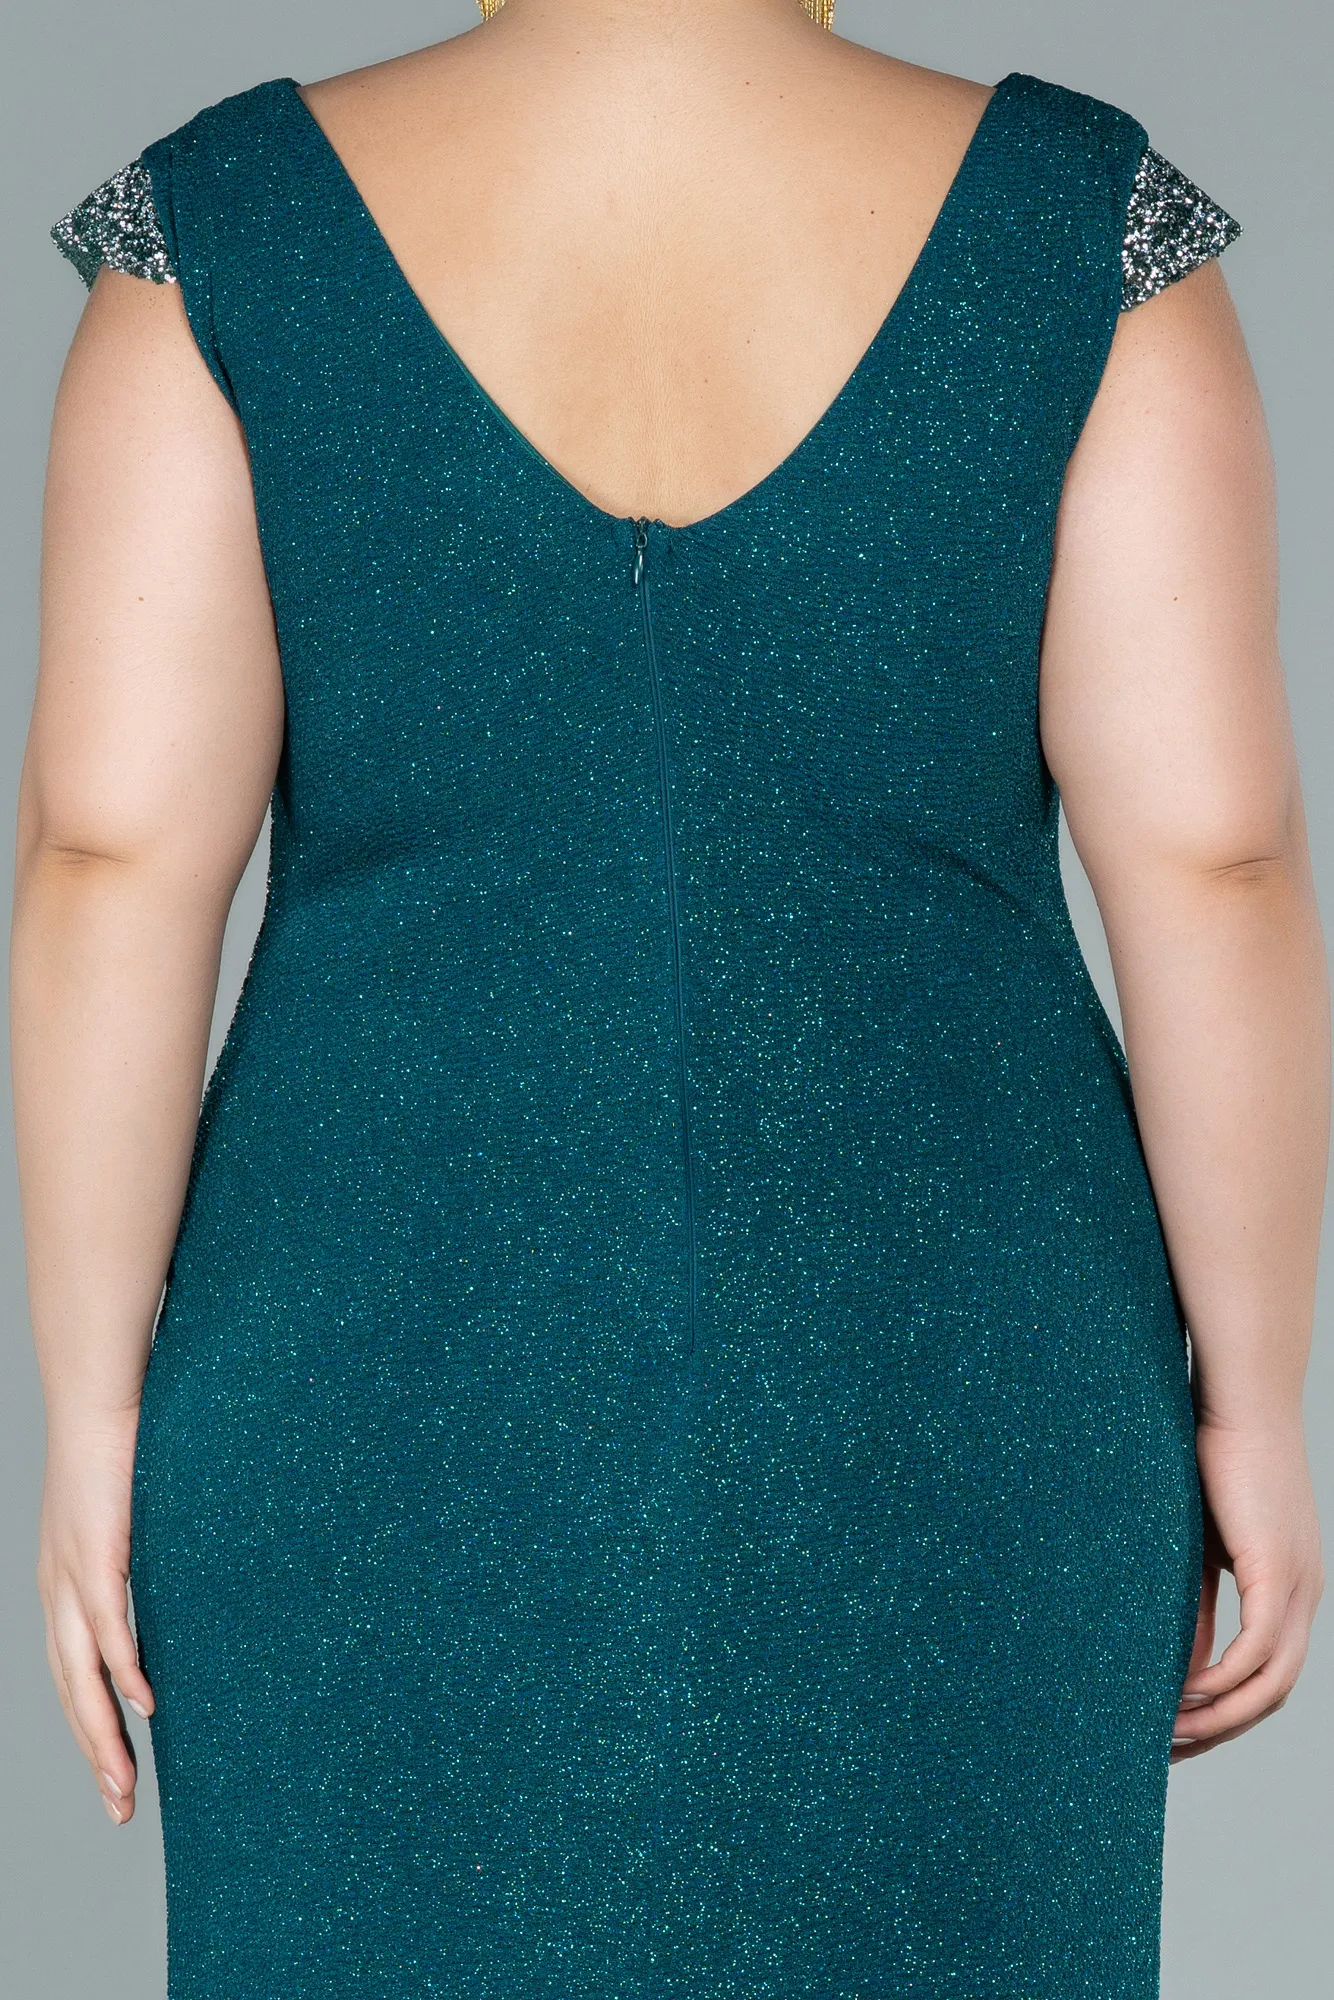 Emerald Green-Long Plus Size Evening Dress ABU2438